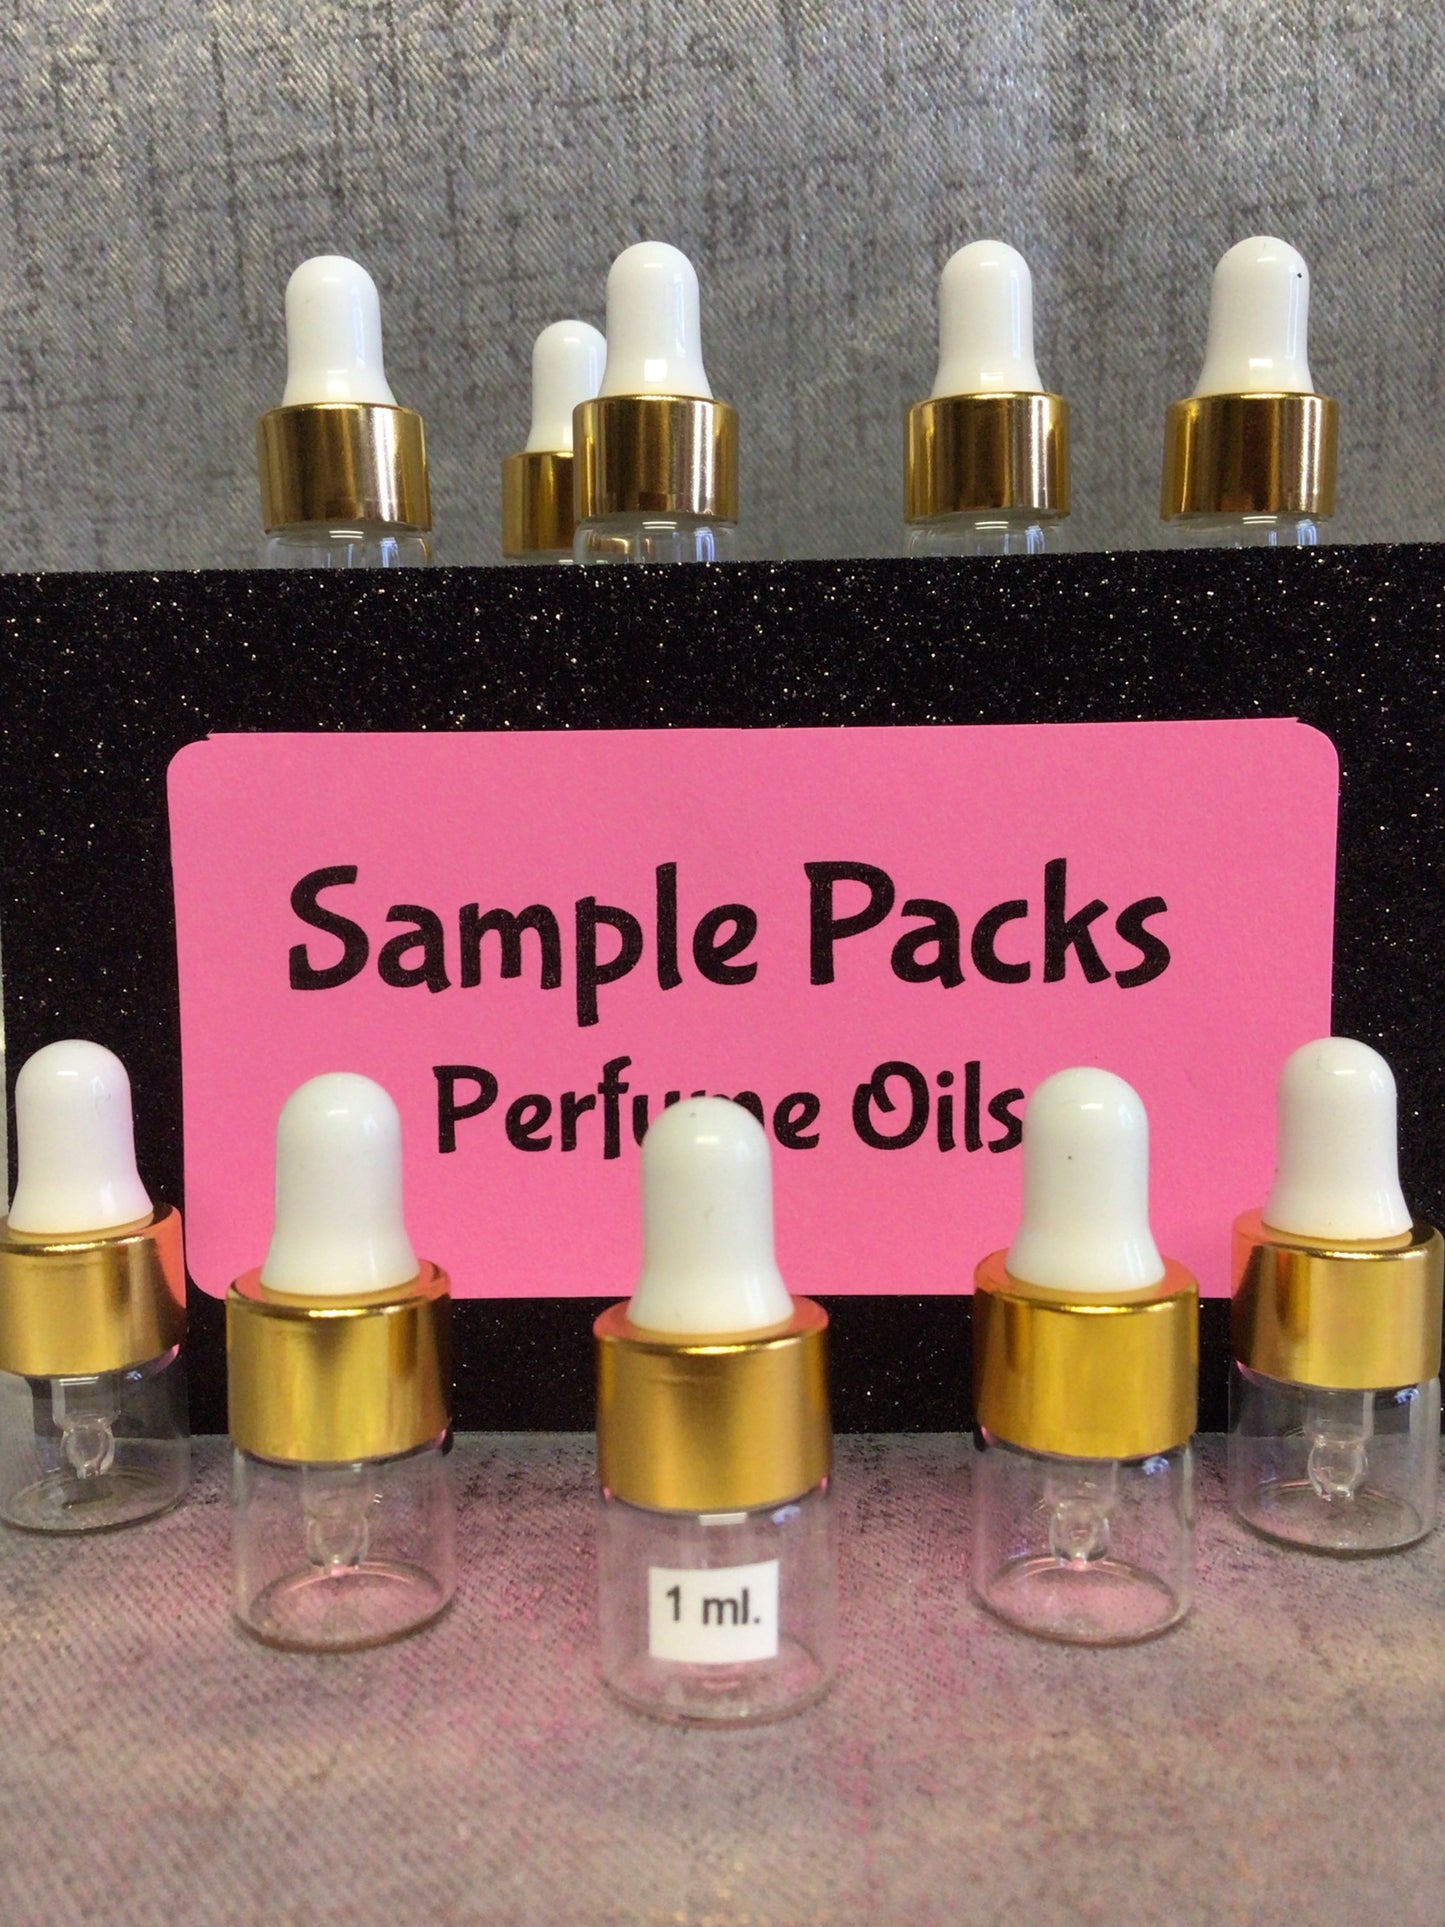 Sample Packs, Perfume Oils, Pure Fragrances, Premium Body Oils, Handmade Perfume, Long Lasting